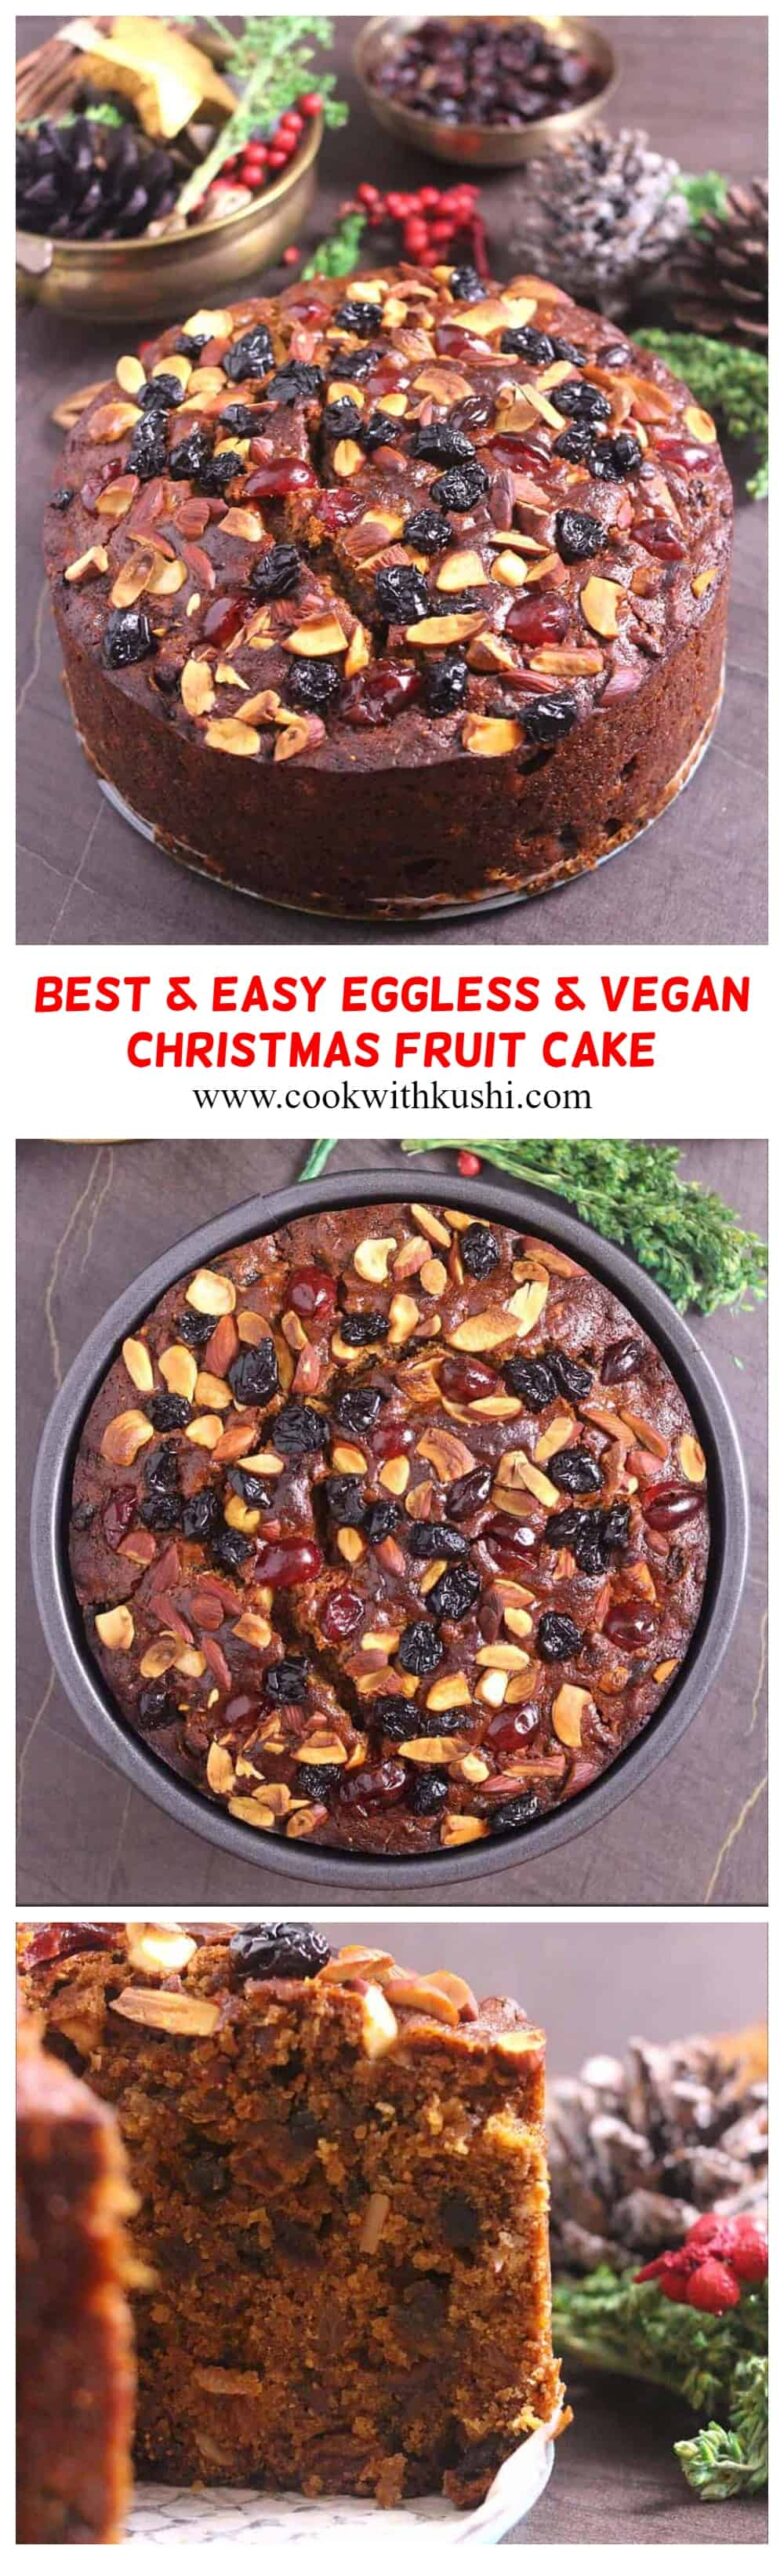 EGGLESS CHRISTMAS FRUIT CAKE | VEGAN CHRISTMAS CAKE | BEST PLUM CAKE #traditional #Oldfashioned #eggless #vegan